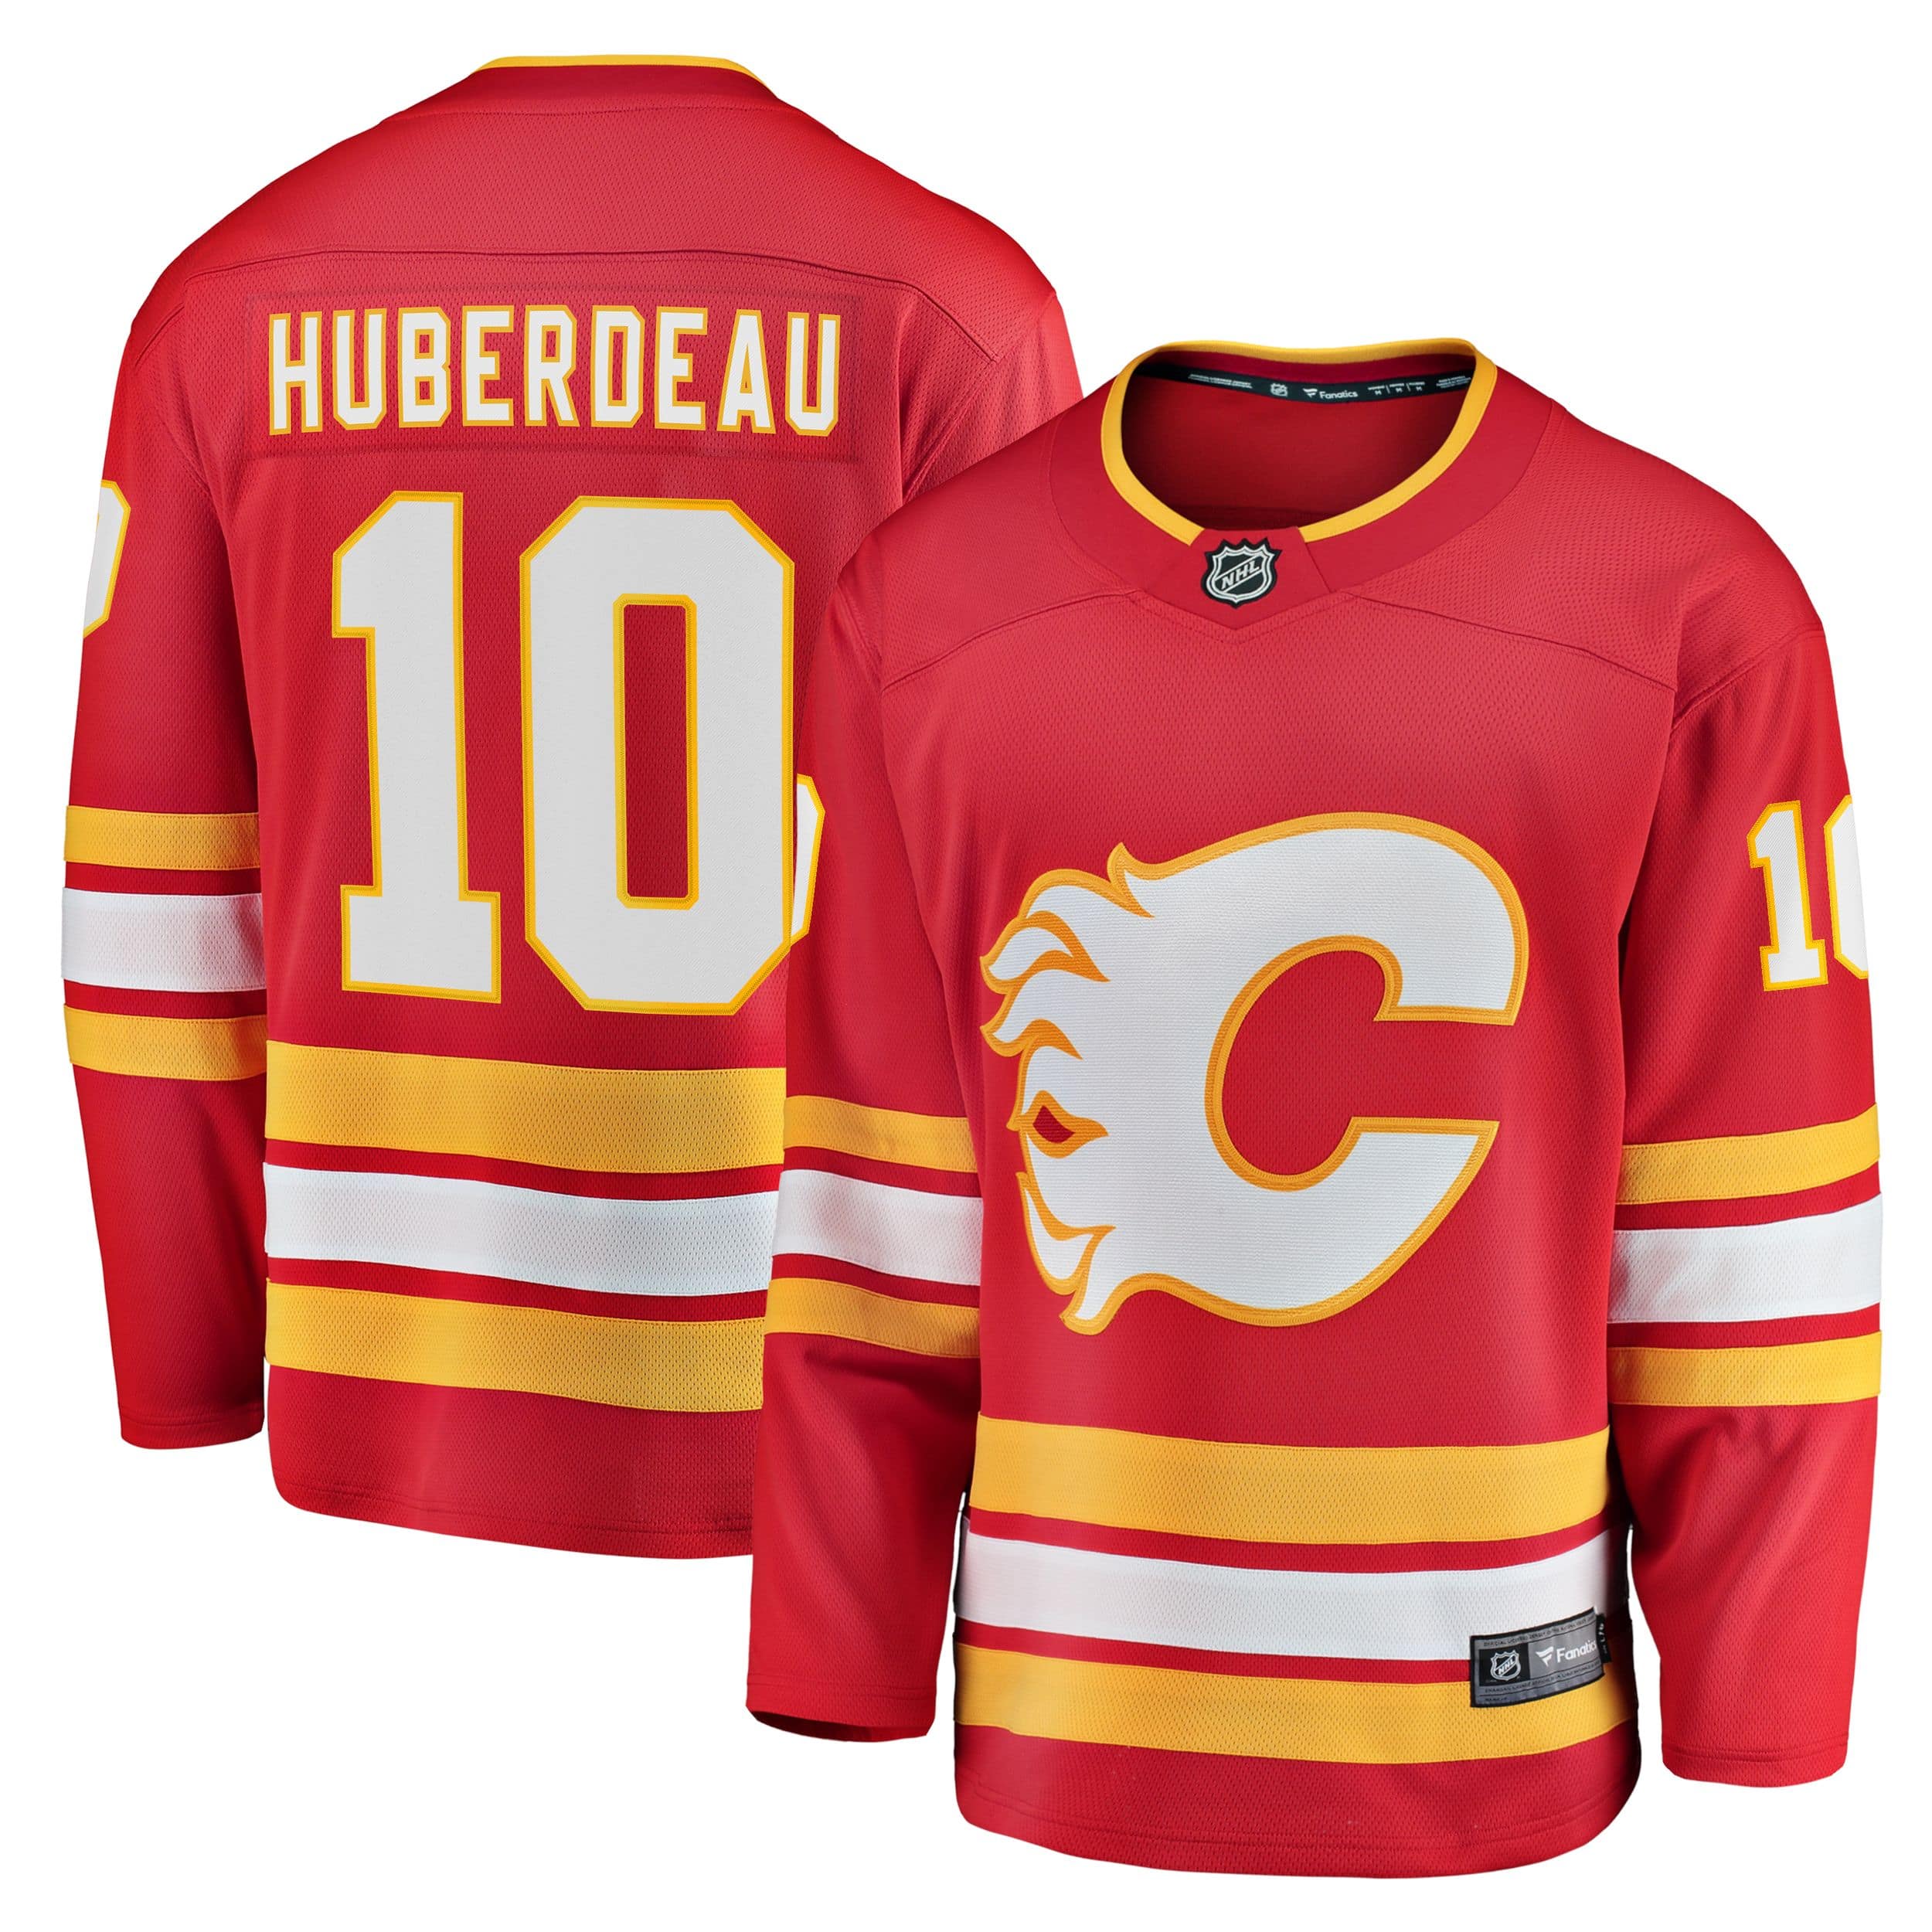 CALGARY, AB - NOVEMBER 1: New Calgary Flames jerseys hang in the